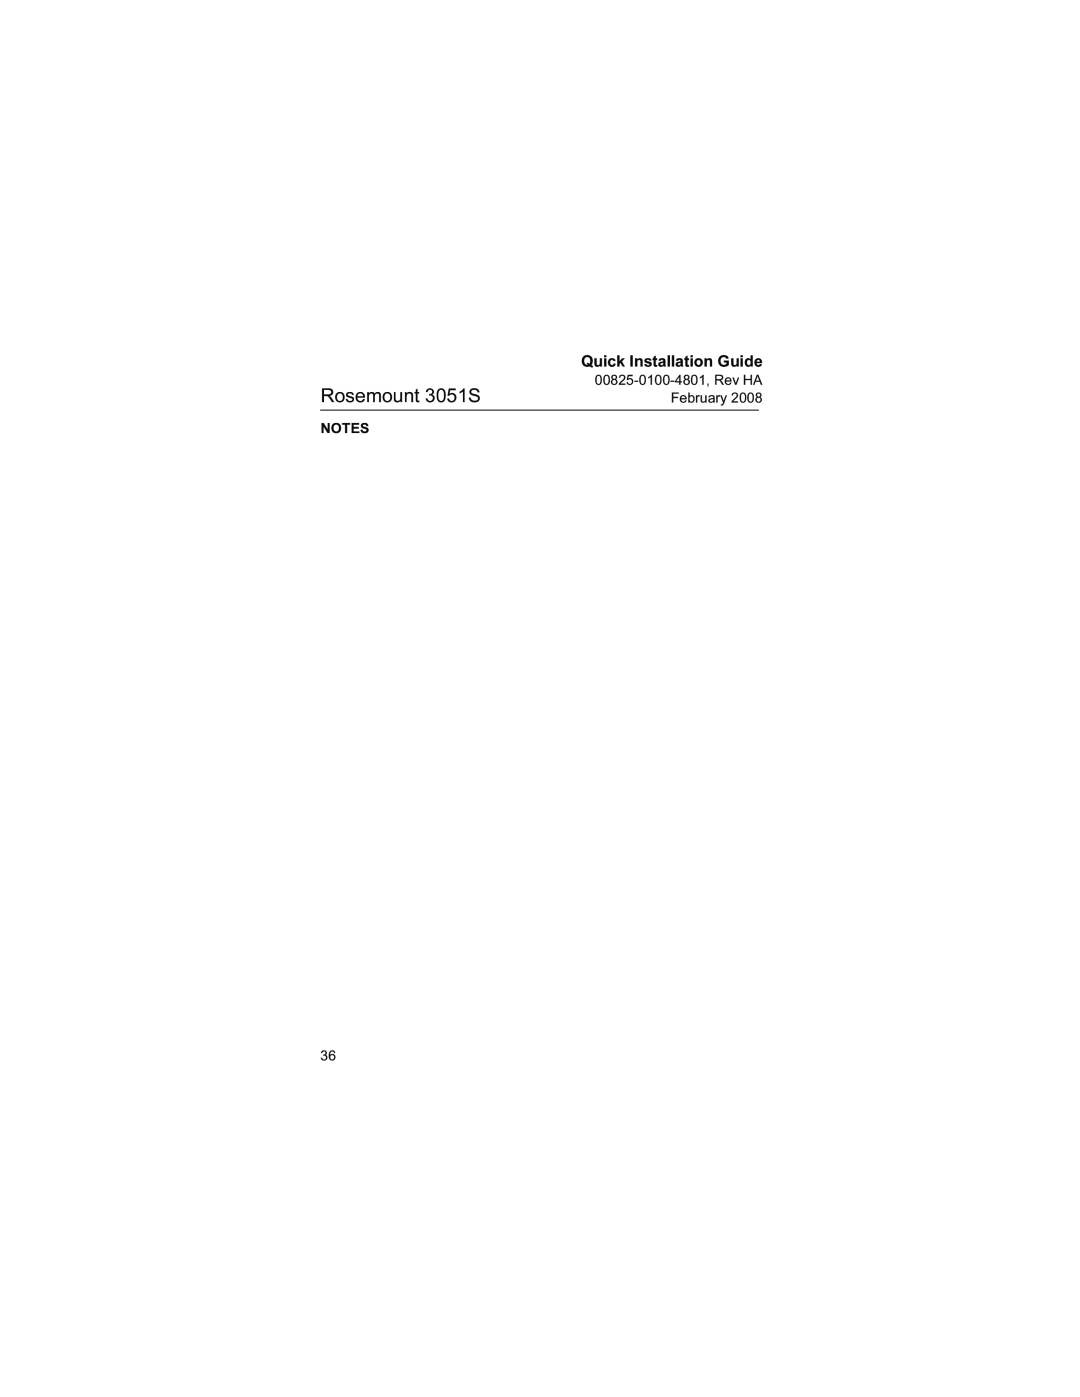 Emerson manual Rosemount 3051S, Quick Installation Guide, 00825-0100-4801, Rev HA February 